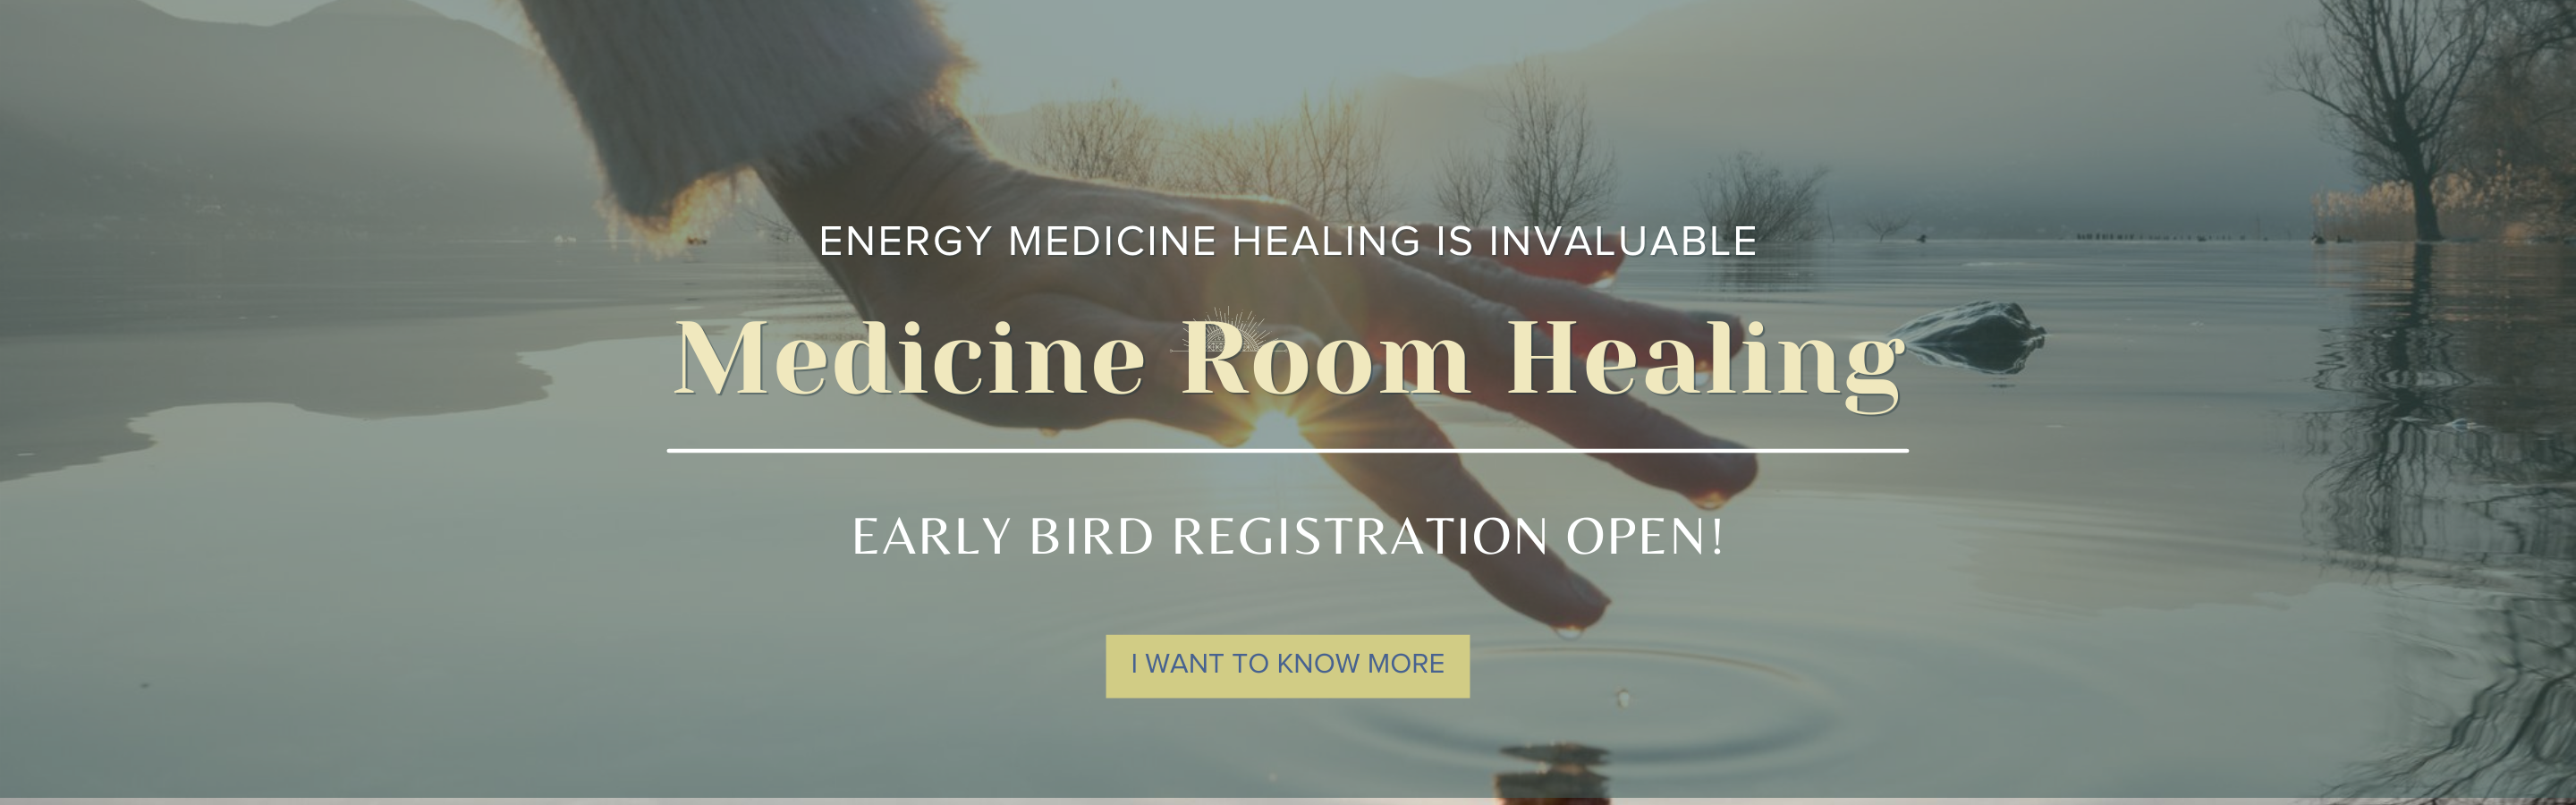 Medicine Room Healing Training course_banner